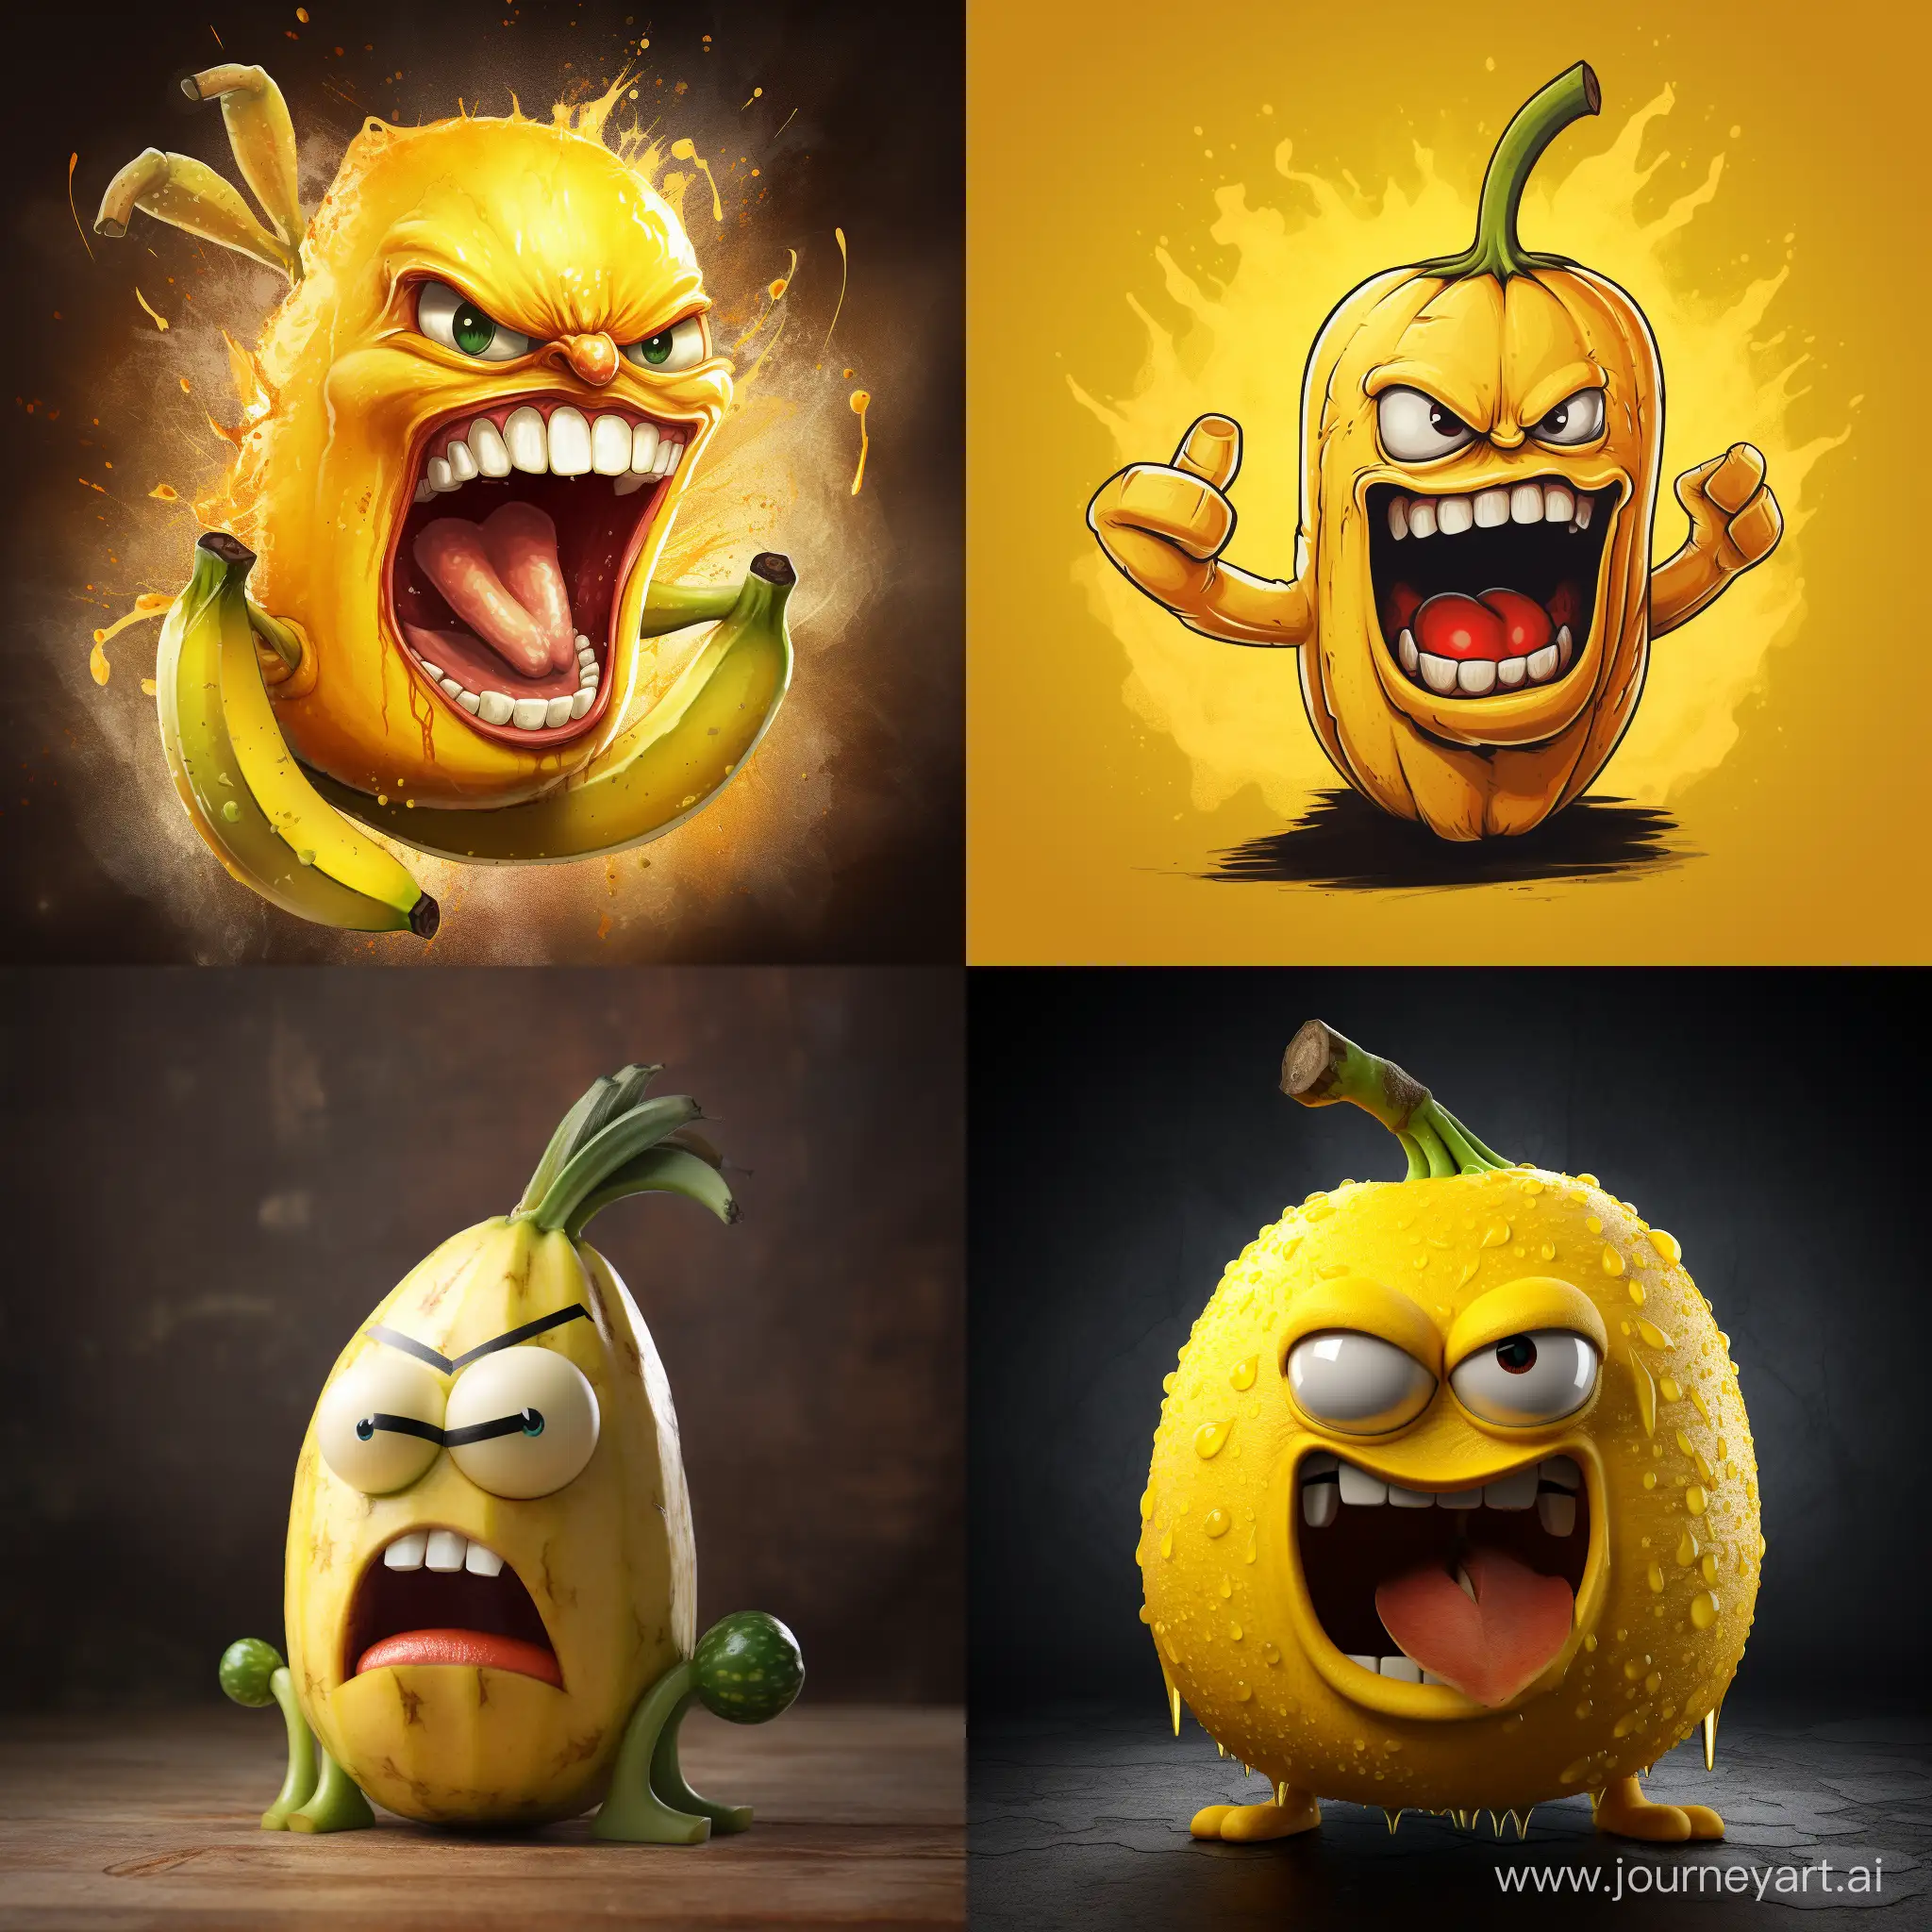 Furious-Banana-Expressing-Intense-Emotions